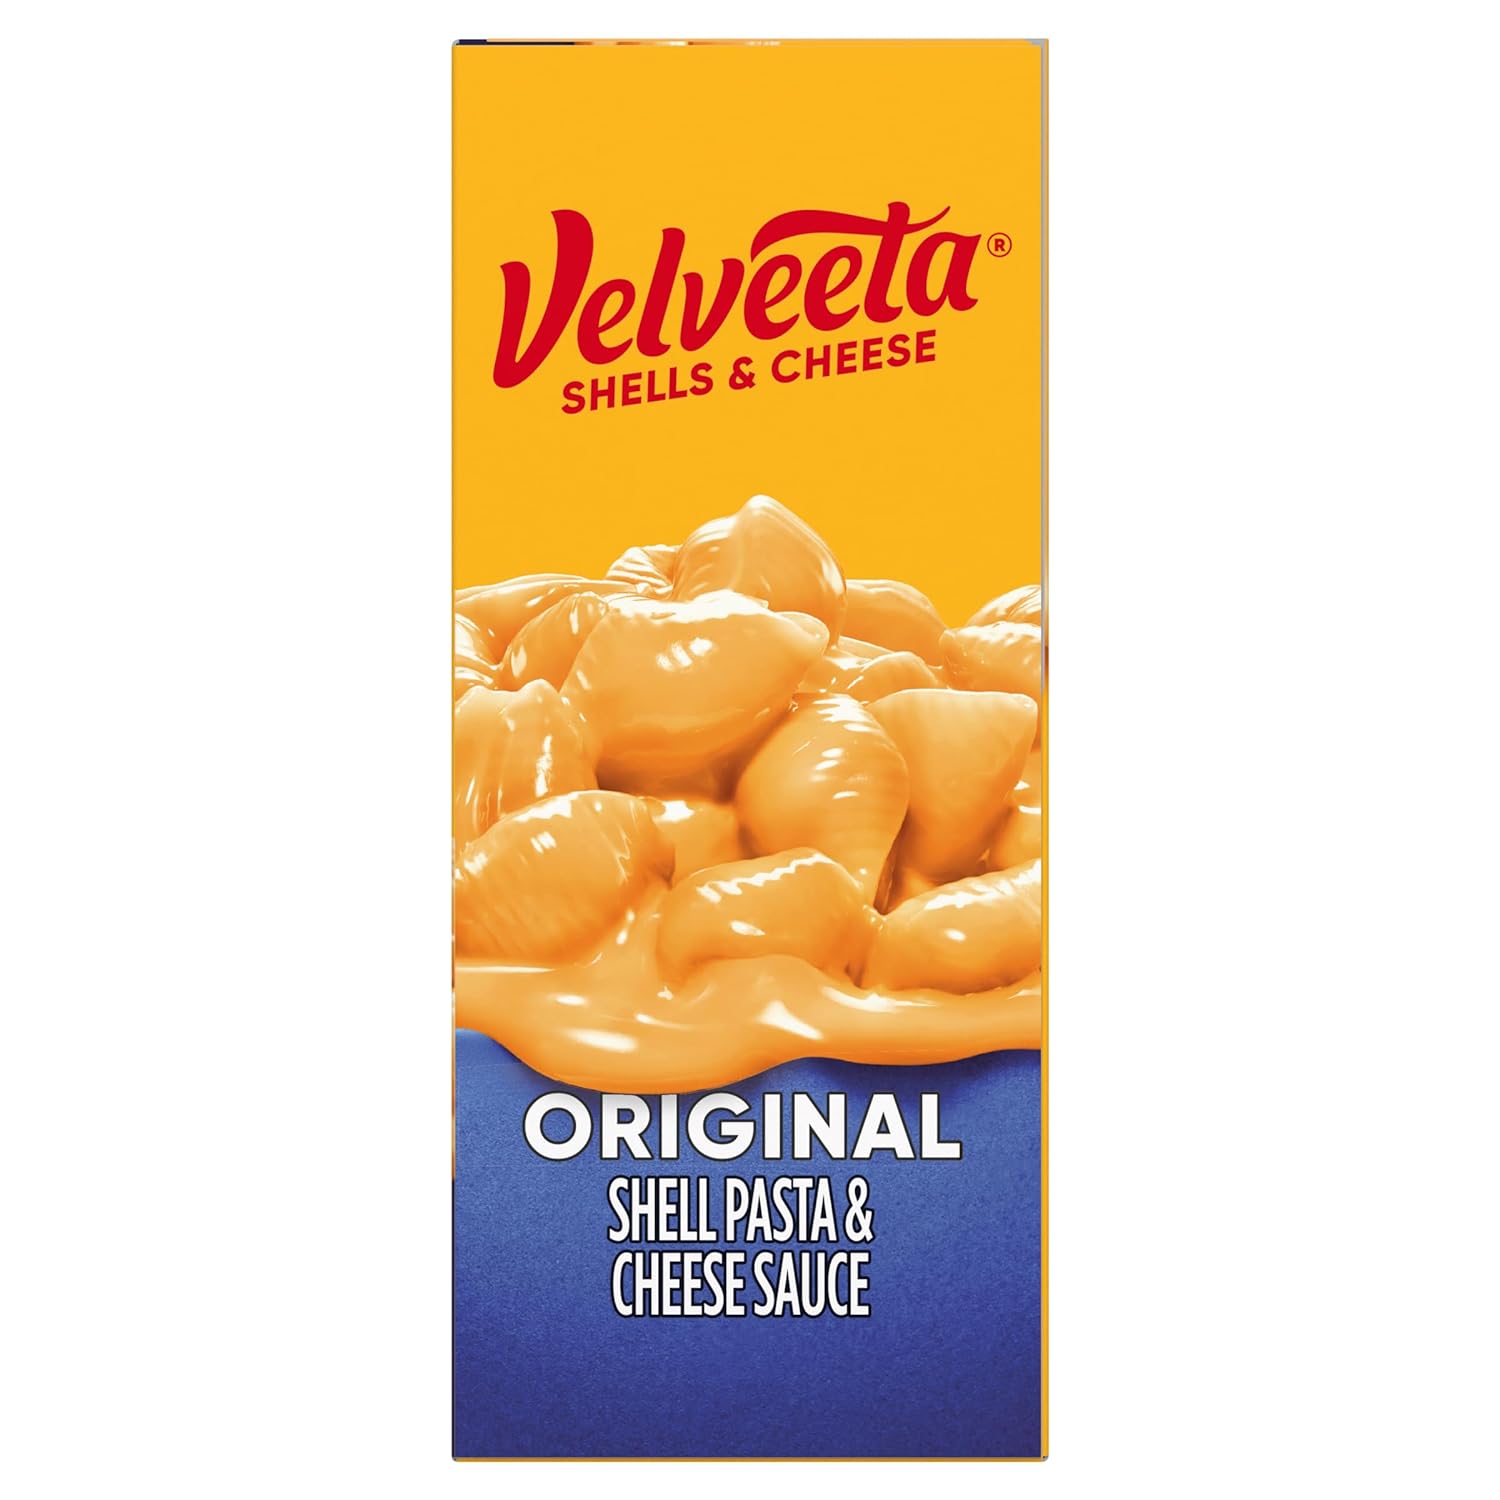 Velveeta Gluten Free Shells & Cheese, 12 oz Box : Grocery & Gourmet Food